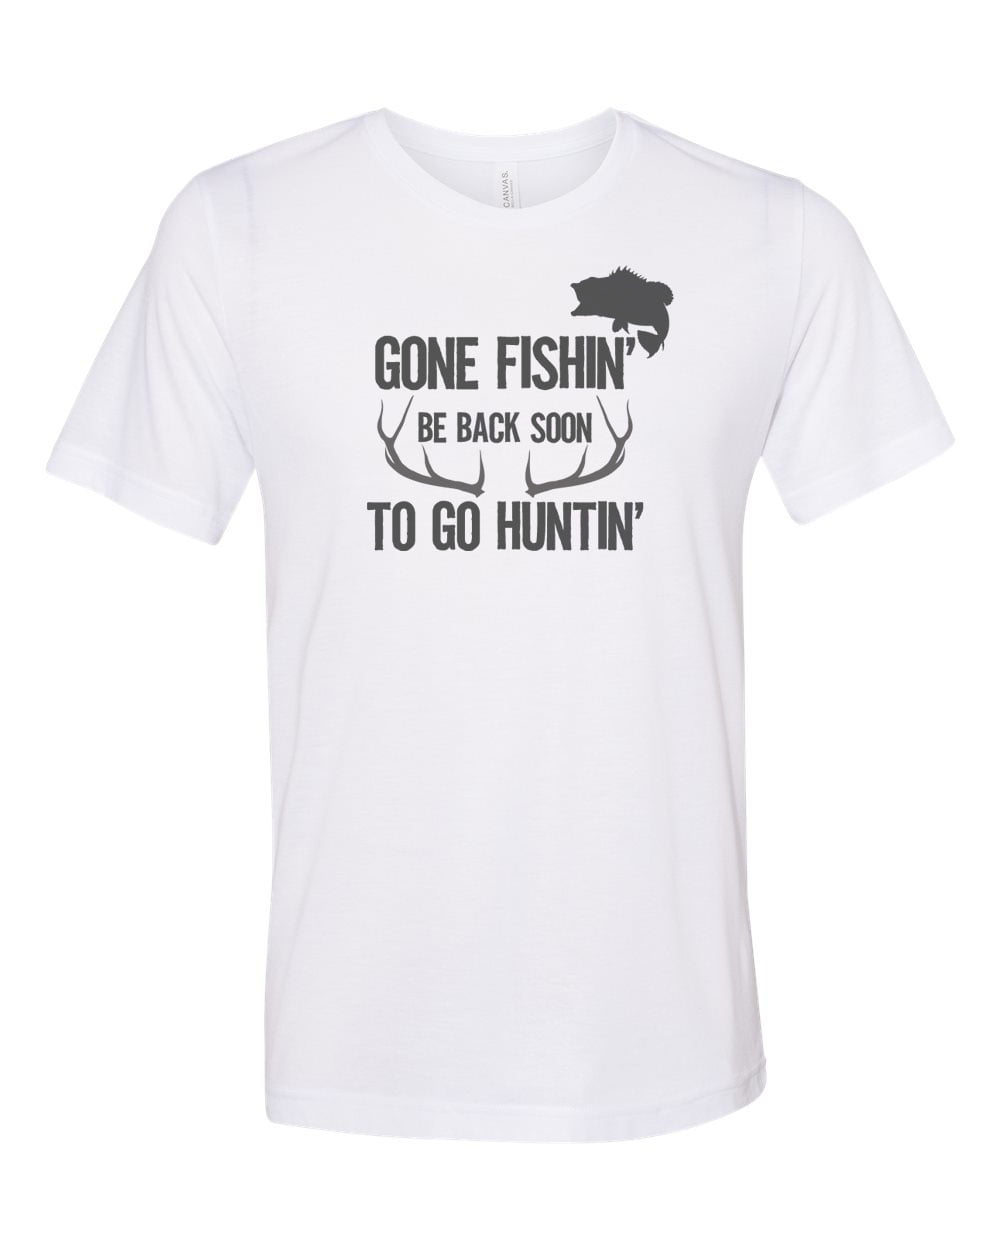 Fish Holiday Apparel Fish Hunter Outfit Hunting Gifts for Men Nature Fisherman T-Shirt Father's Day Shirt Bass Hunter Shirt